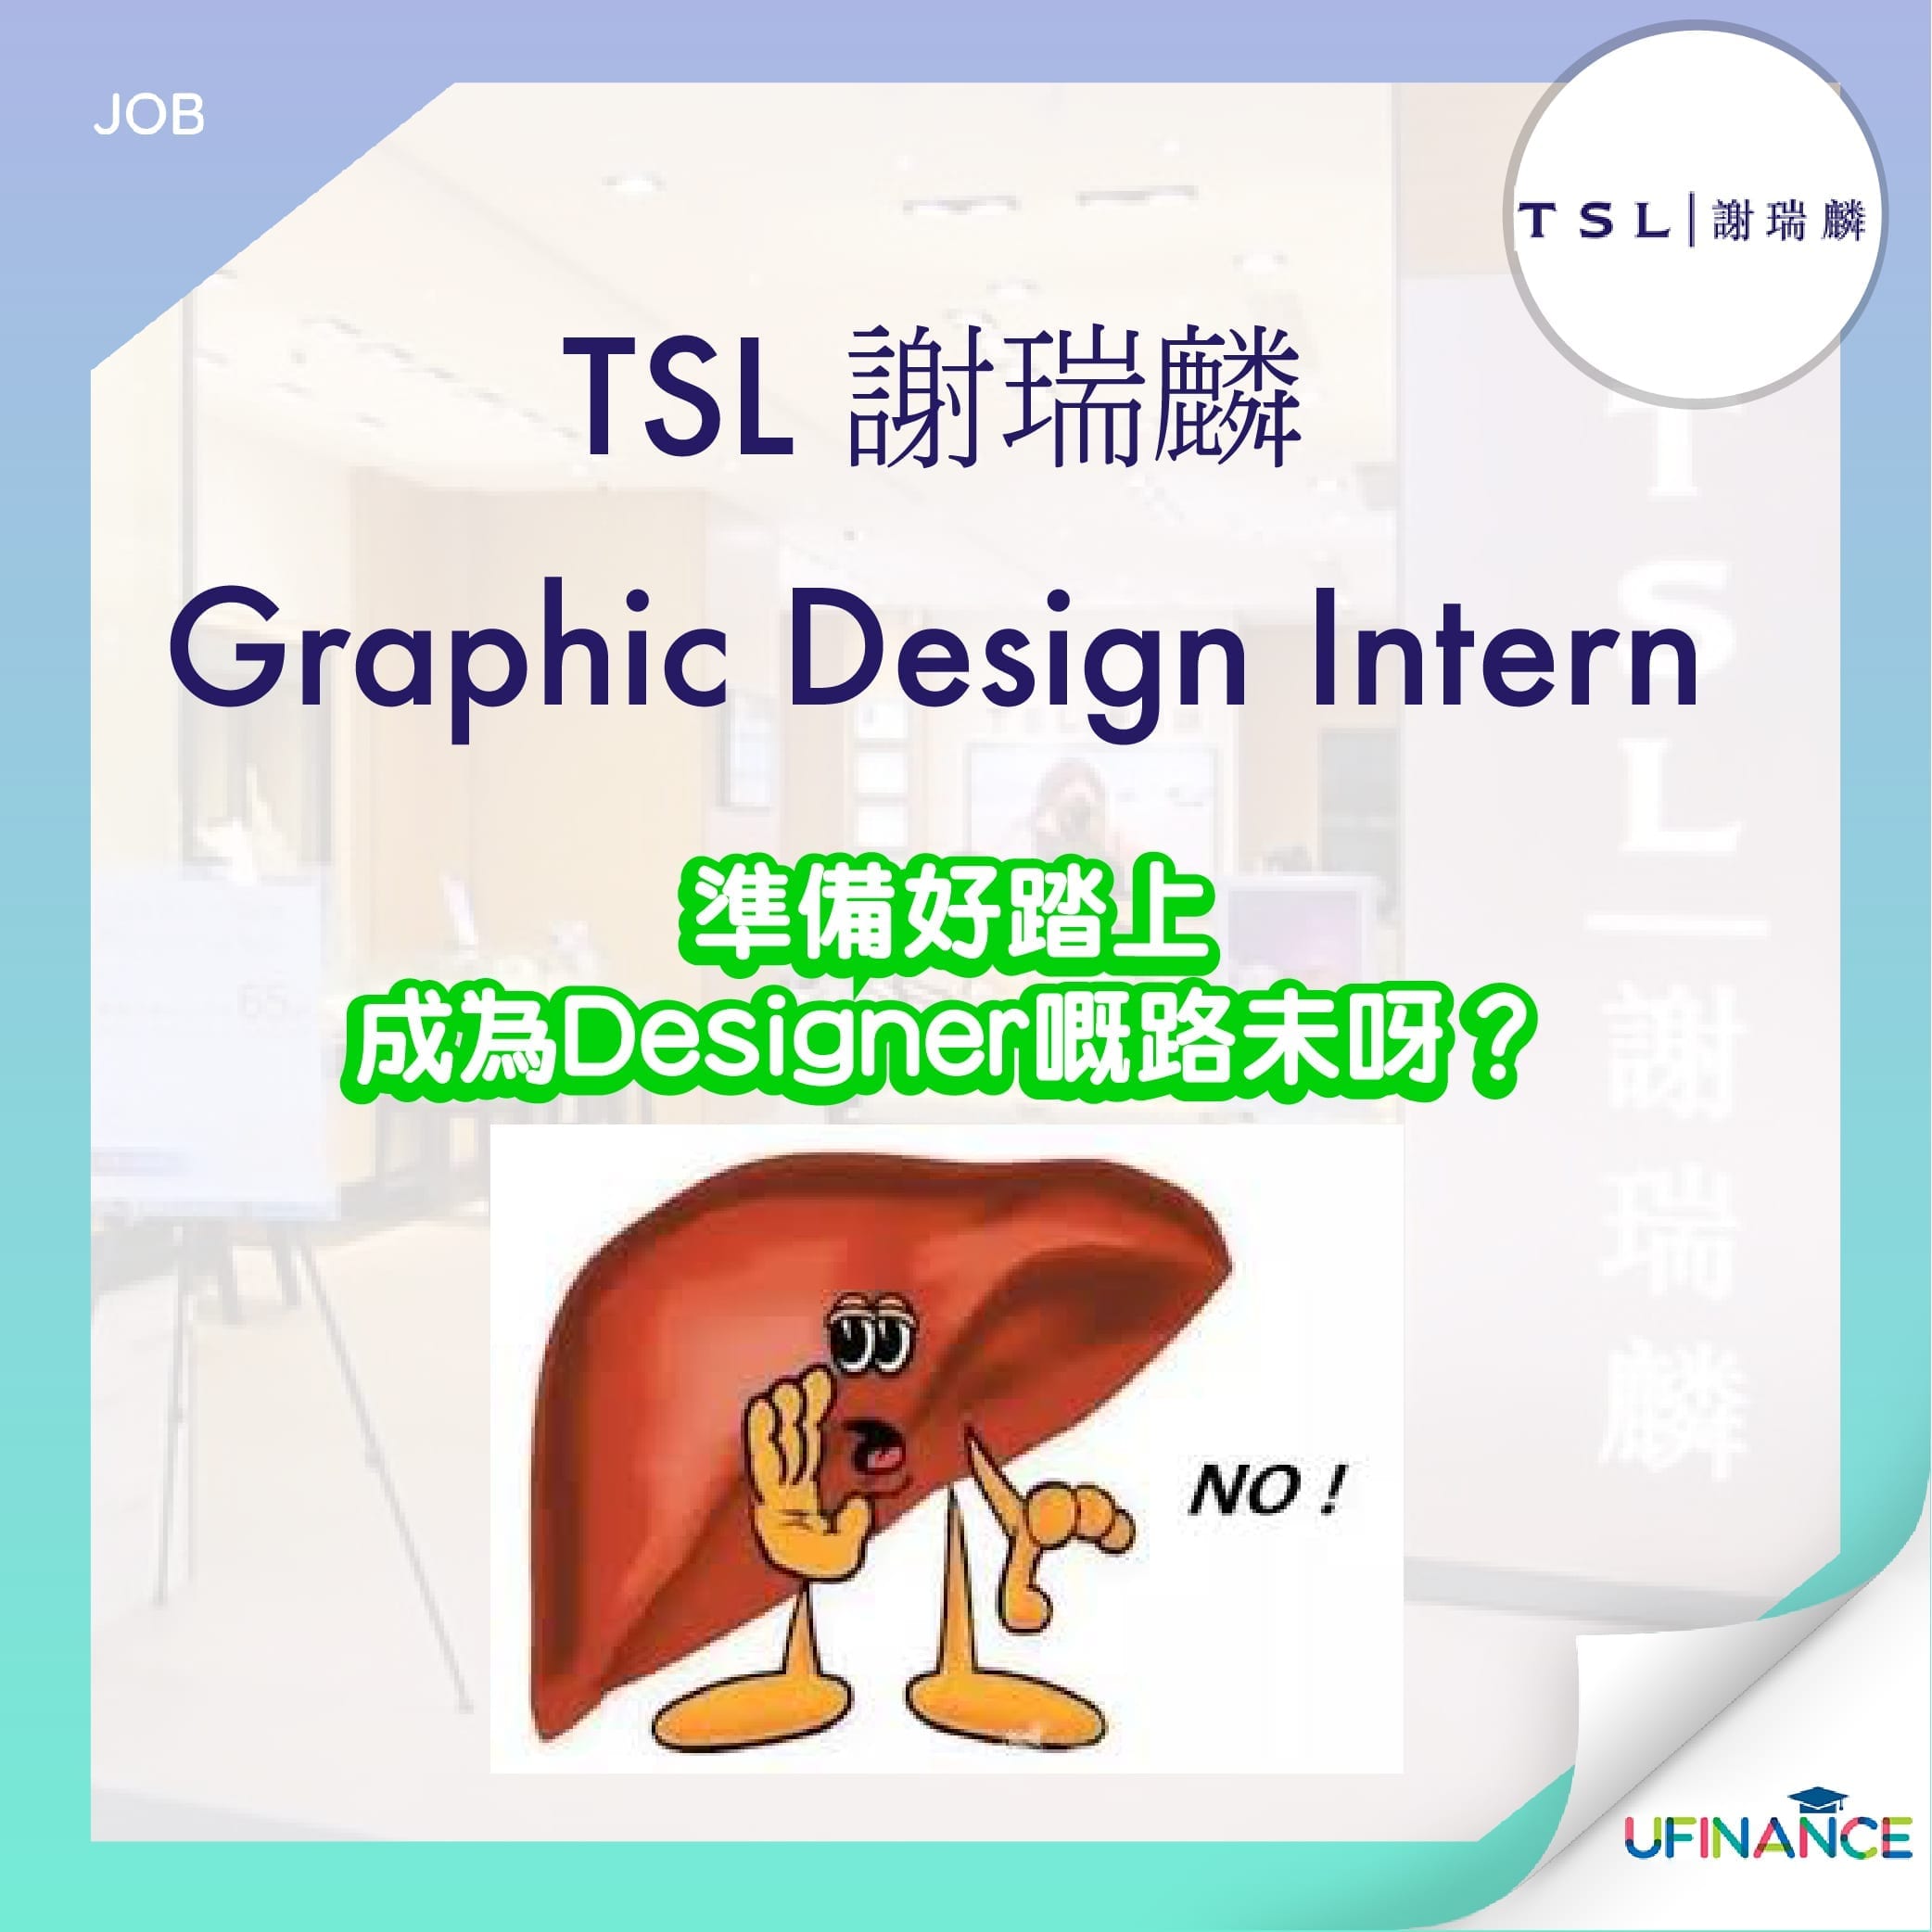 TSL 謝瑞麟-Graphic Design Intern